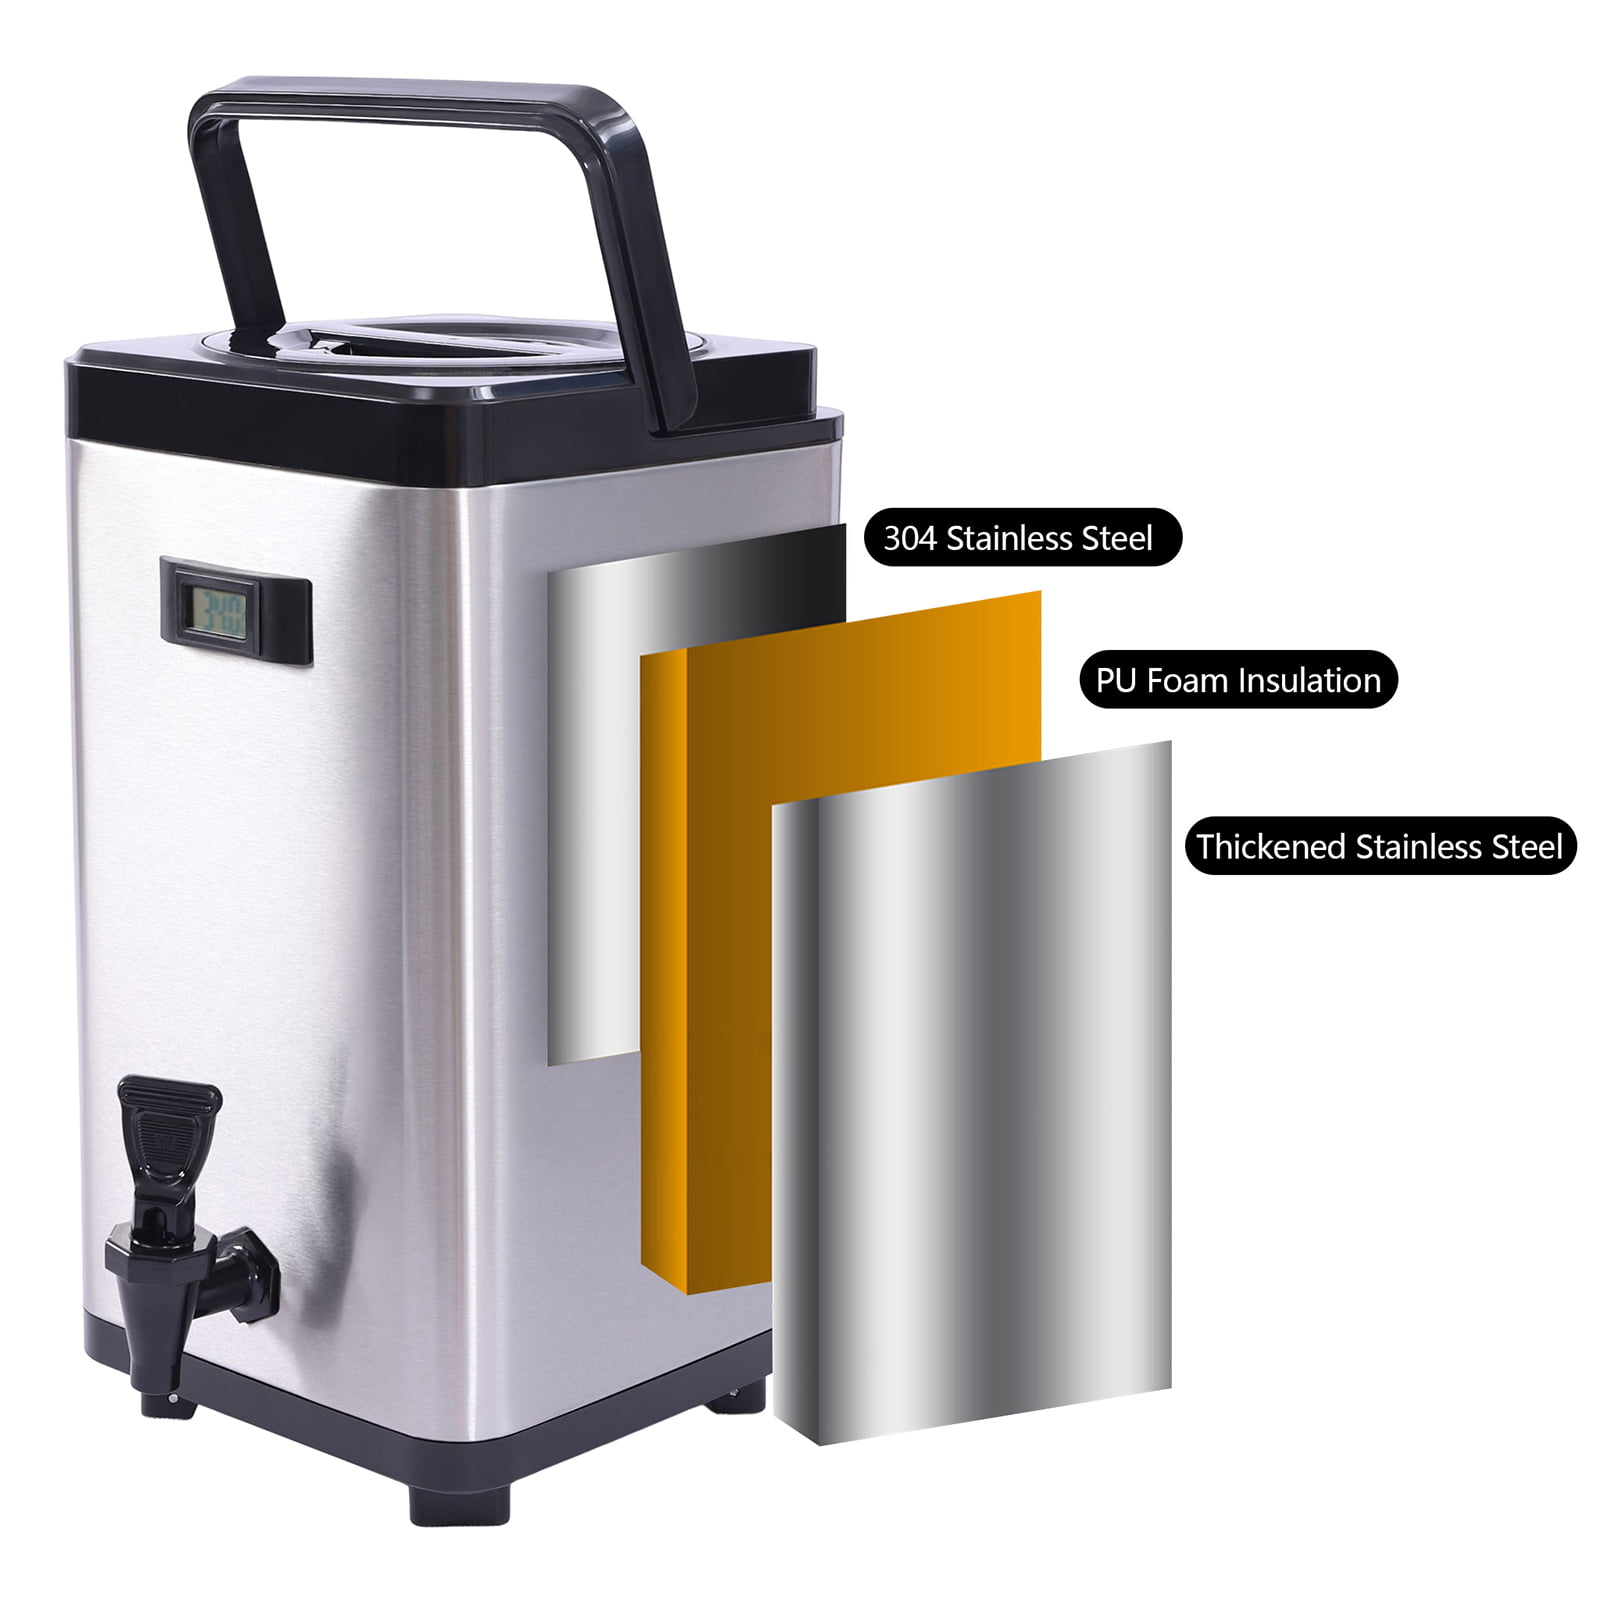 Vollum Stainless Steel Insulated Beverage Dispenser - Brown, 12L